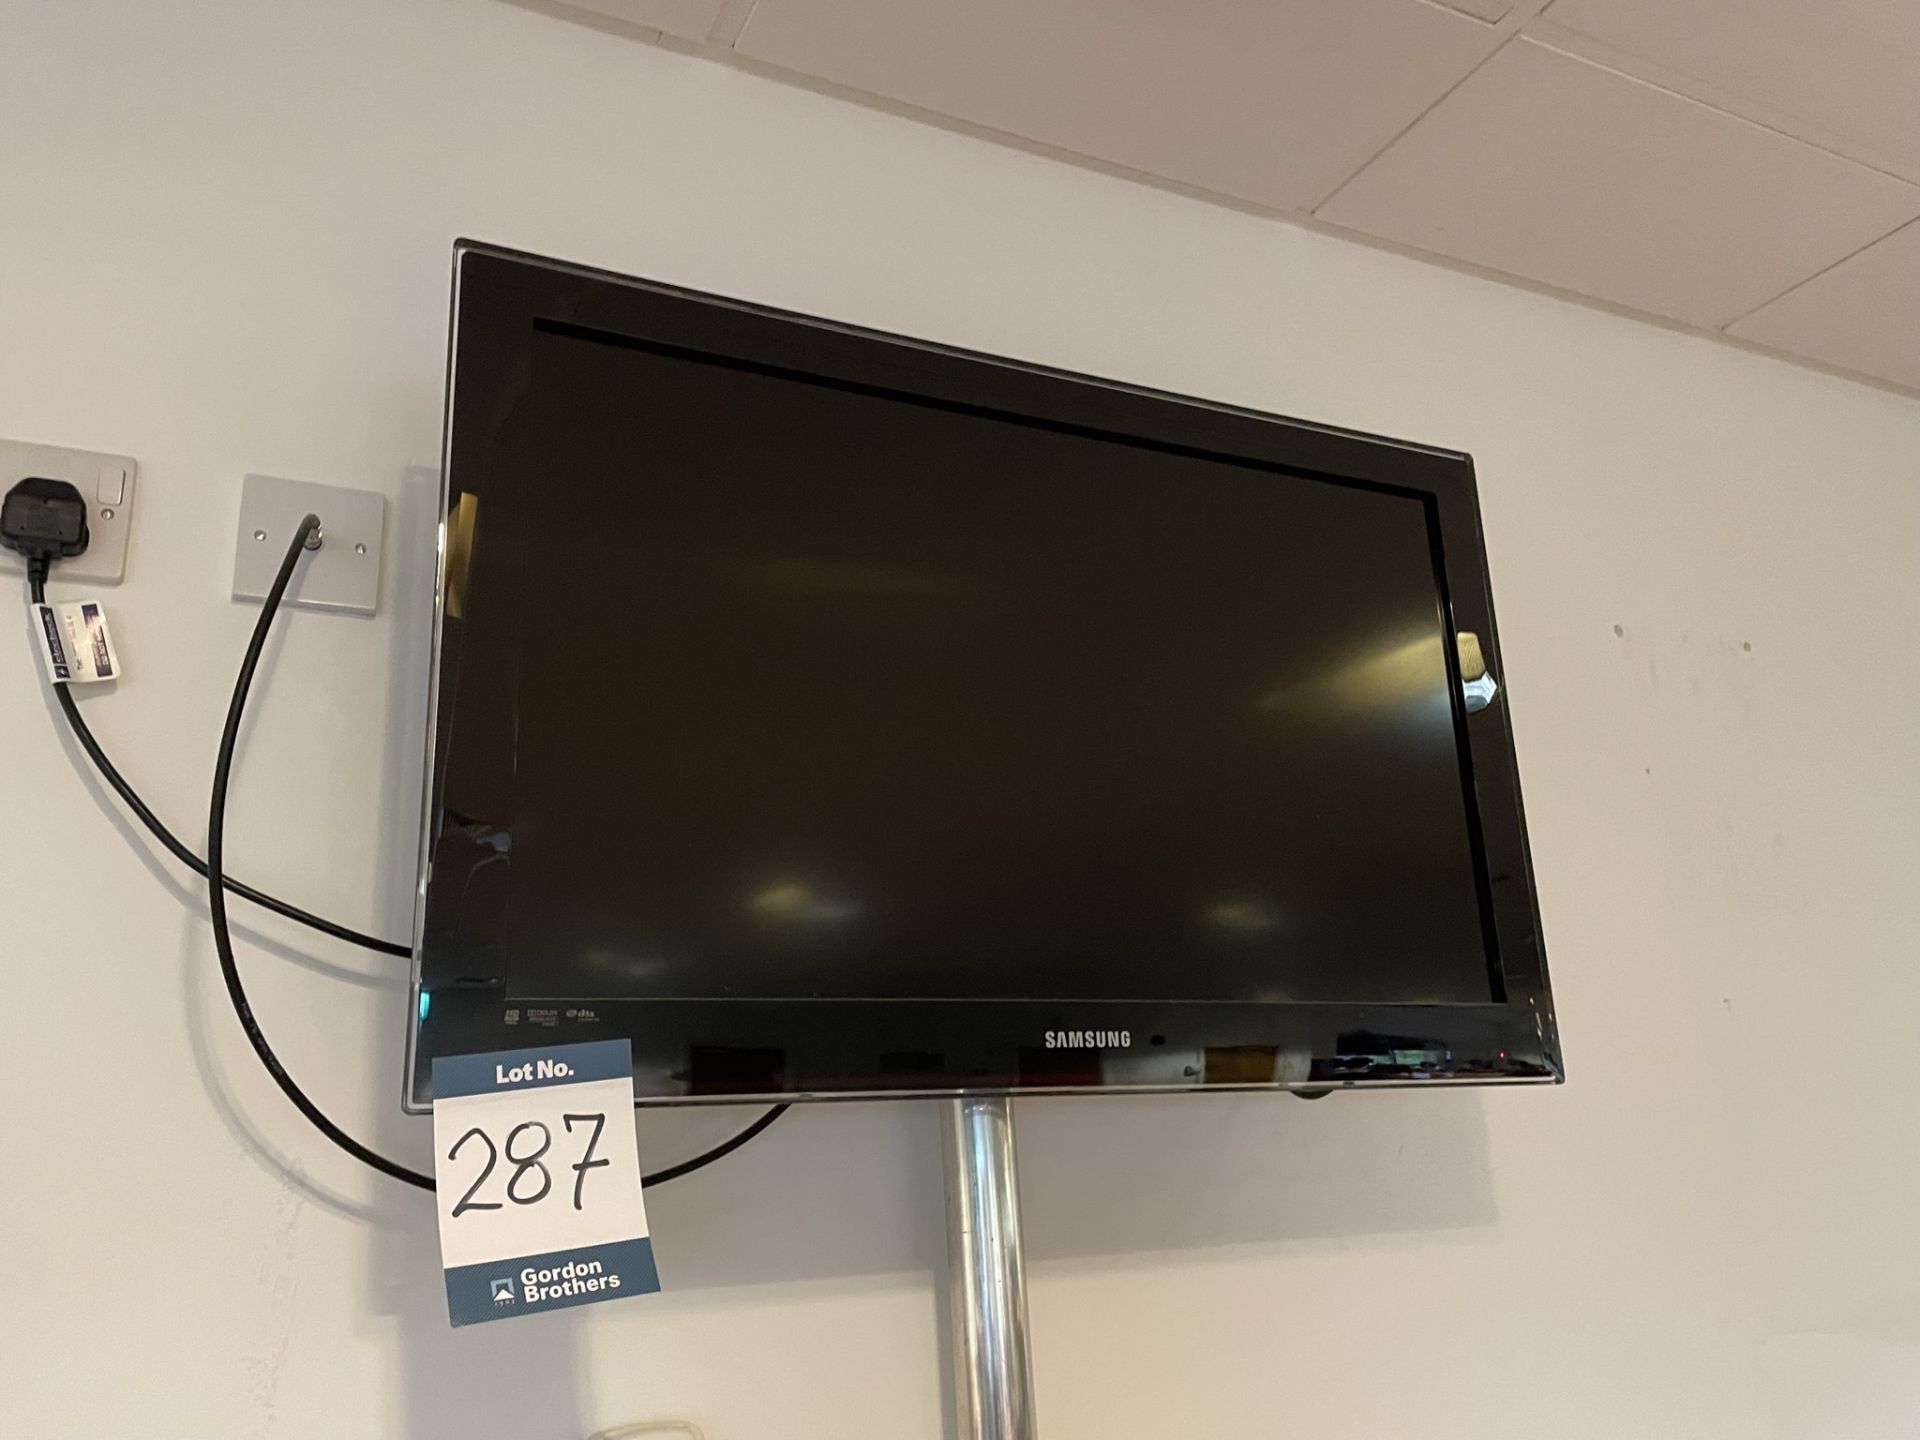 Samsung, 32" wall mounted flat screen television